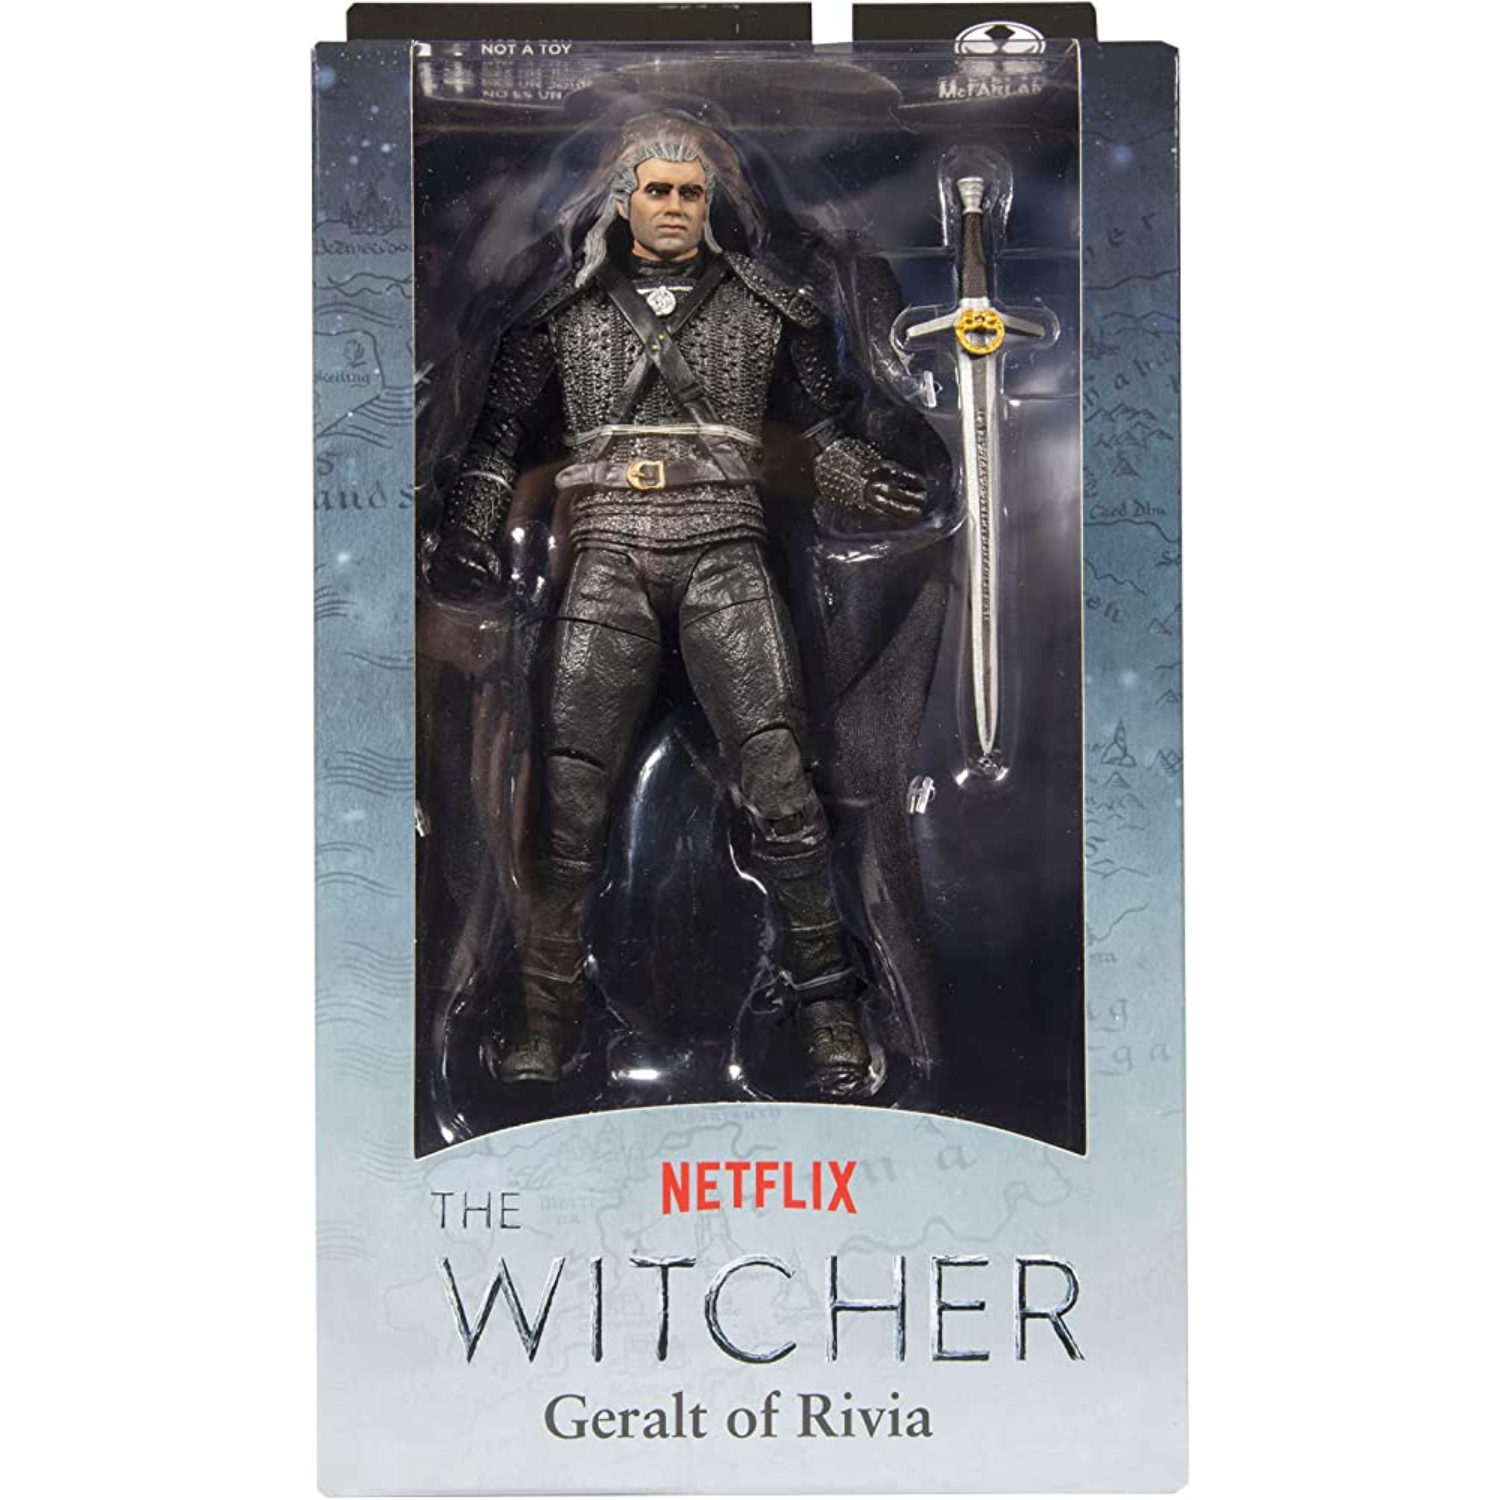 McFarlane Figura de Accion: The Witcher Netflix - Geralt Rivia Capa de Invierno 7 Pulgadas